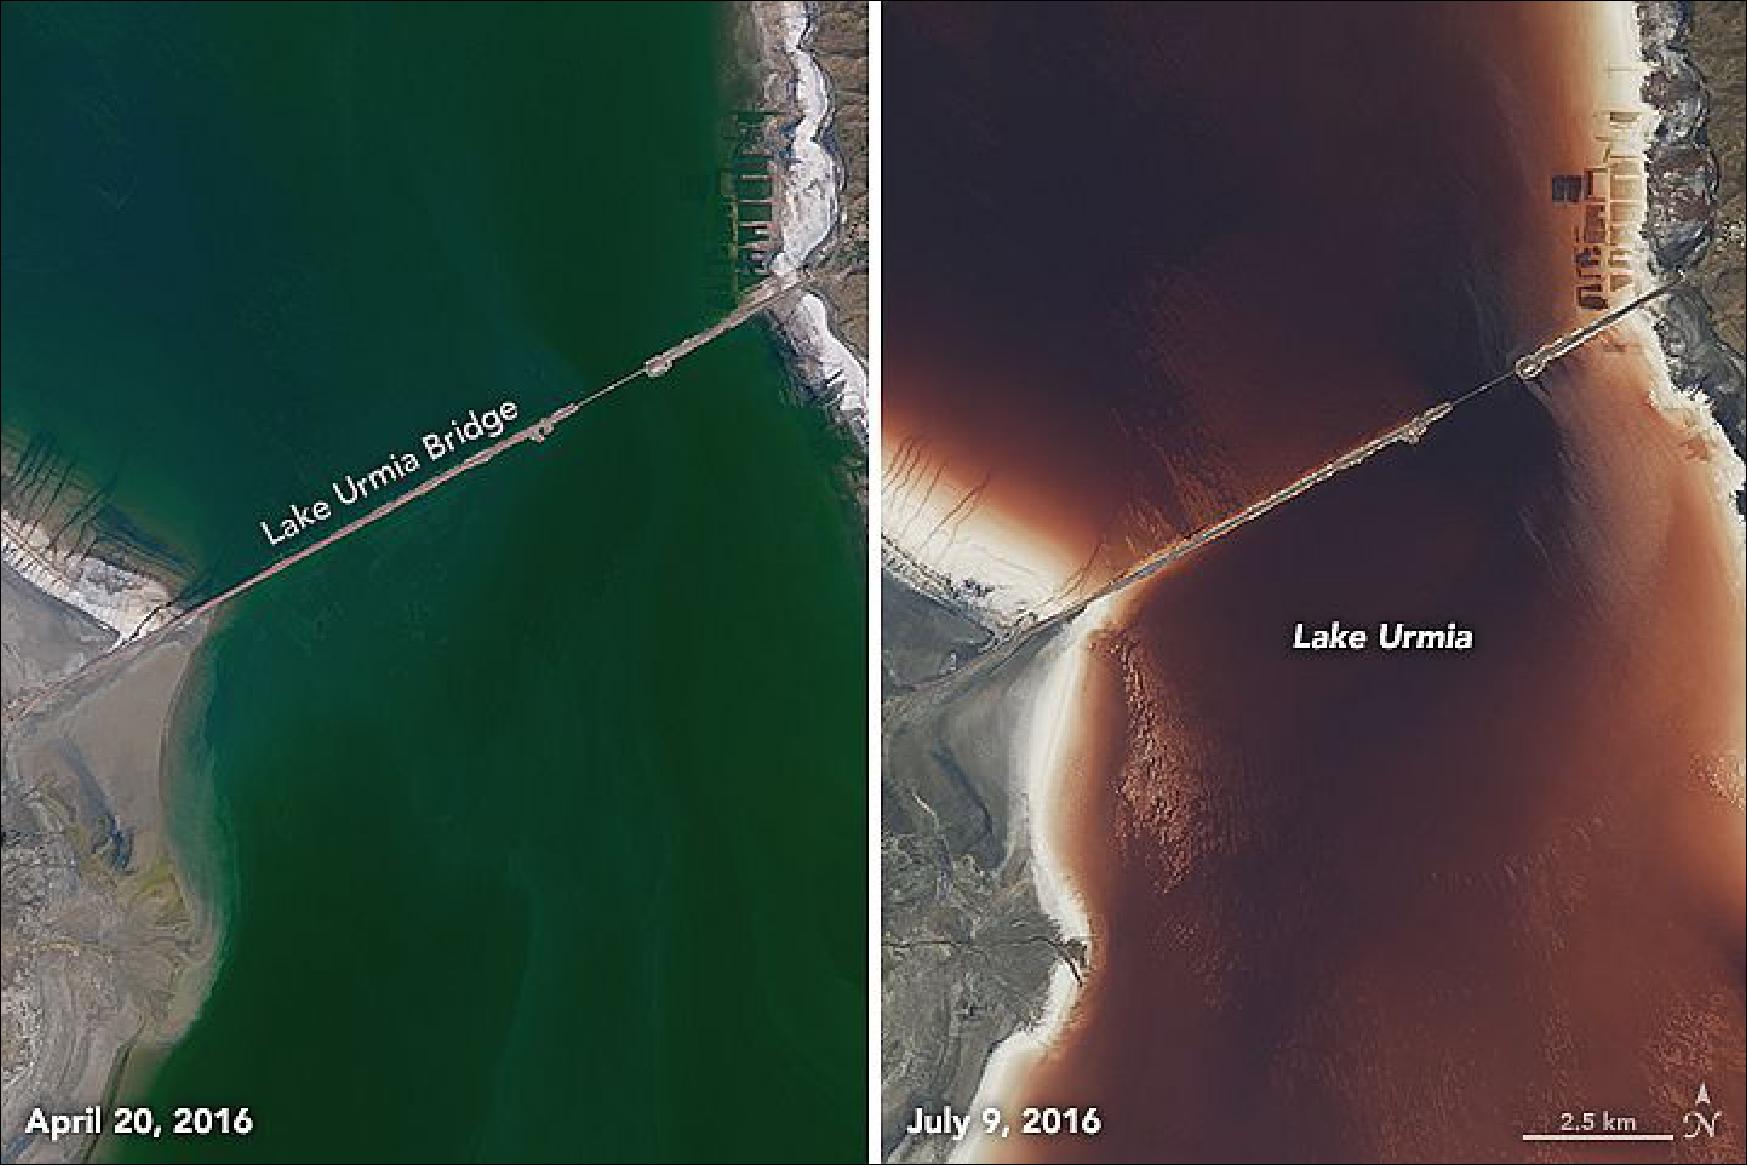 Figure 119: Detail image of Lake Urmia, captured with OLI (Operational Land Imager) of Landsat-8 on April 20 and July 9, 2016 (image credit: NASA Earth Observatory, images by Joshua Stevens using USGS data)